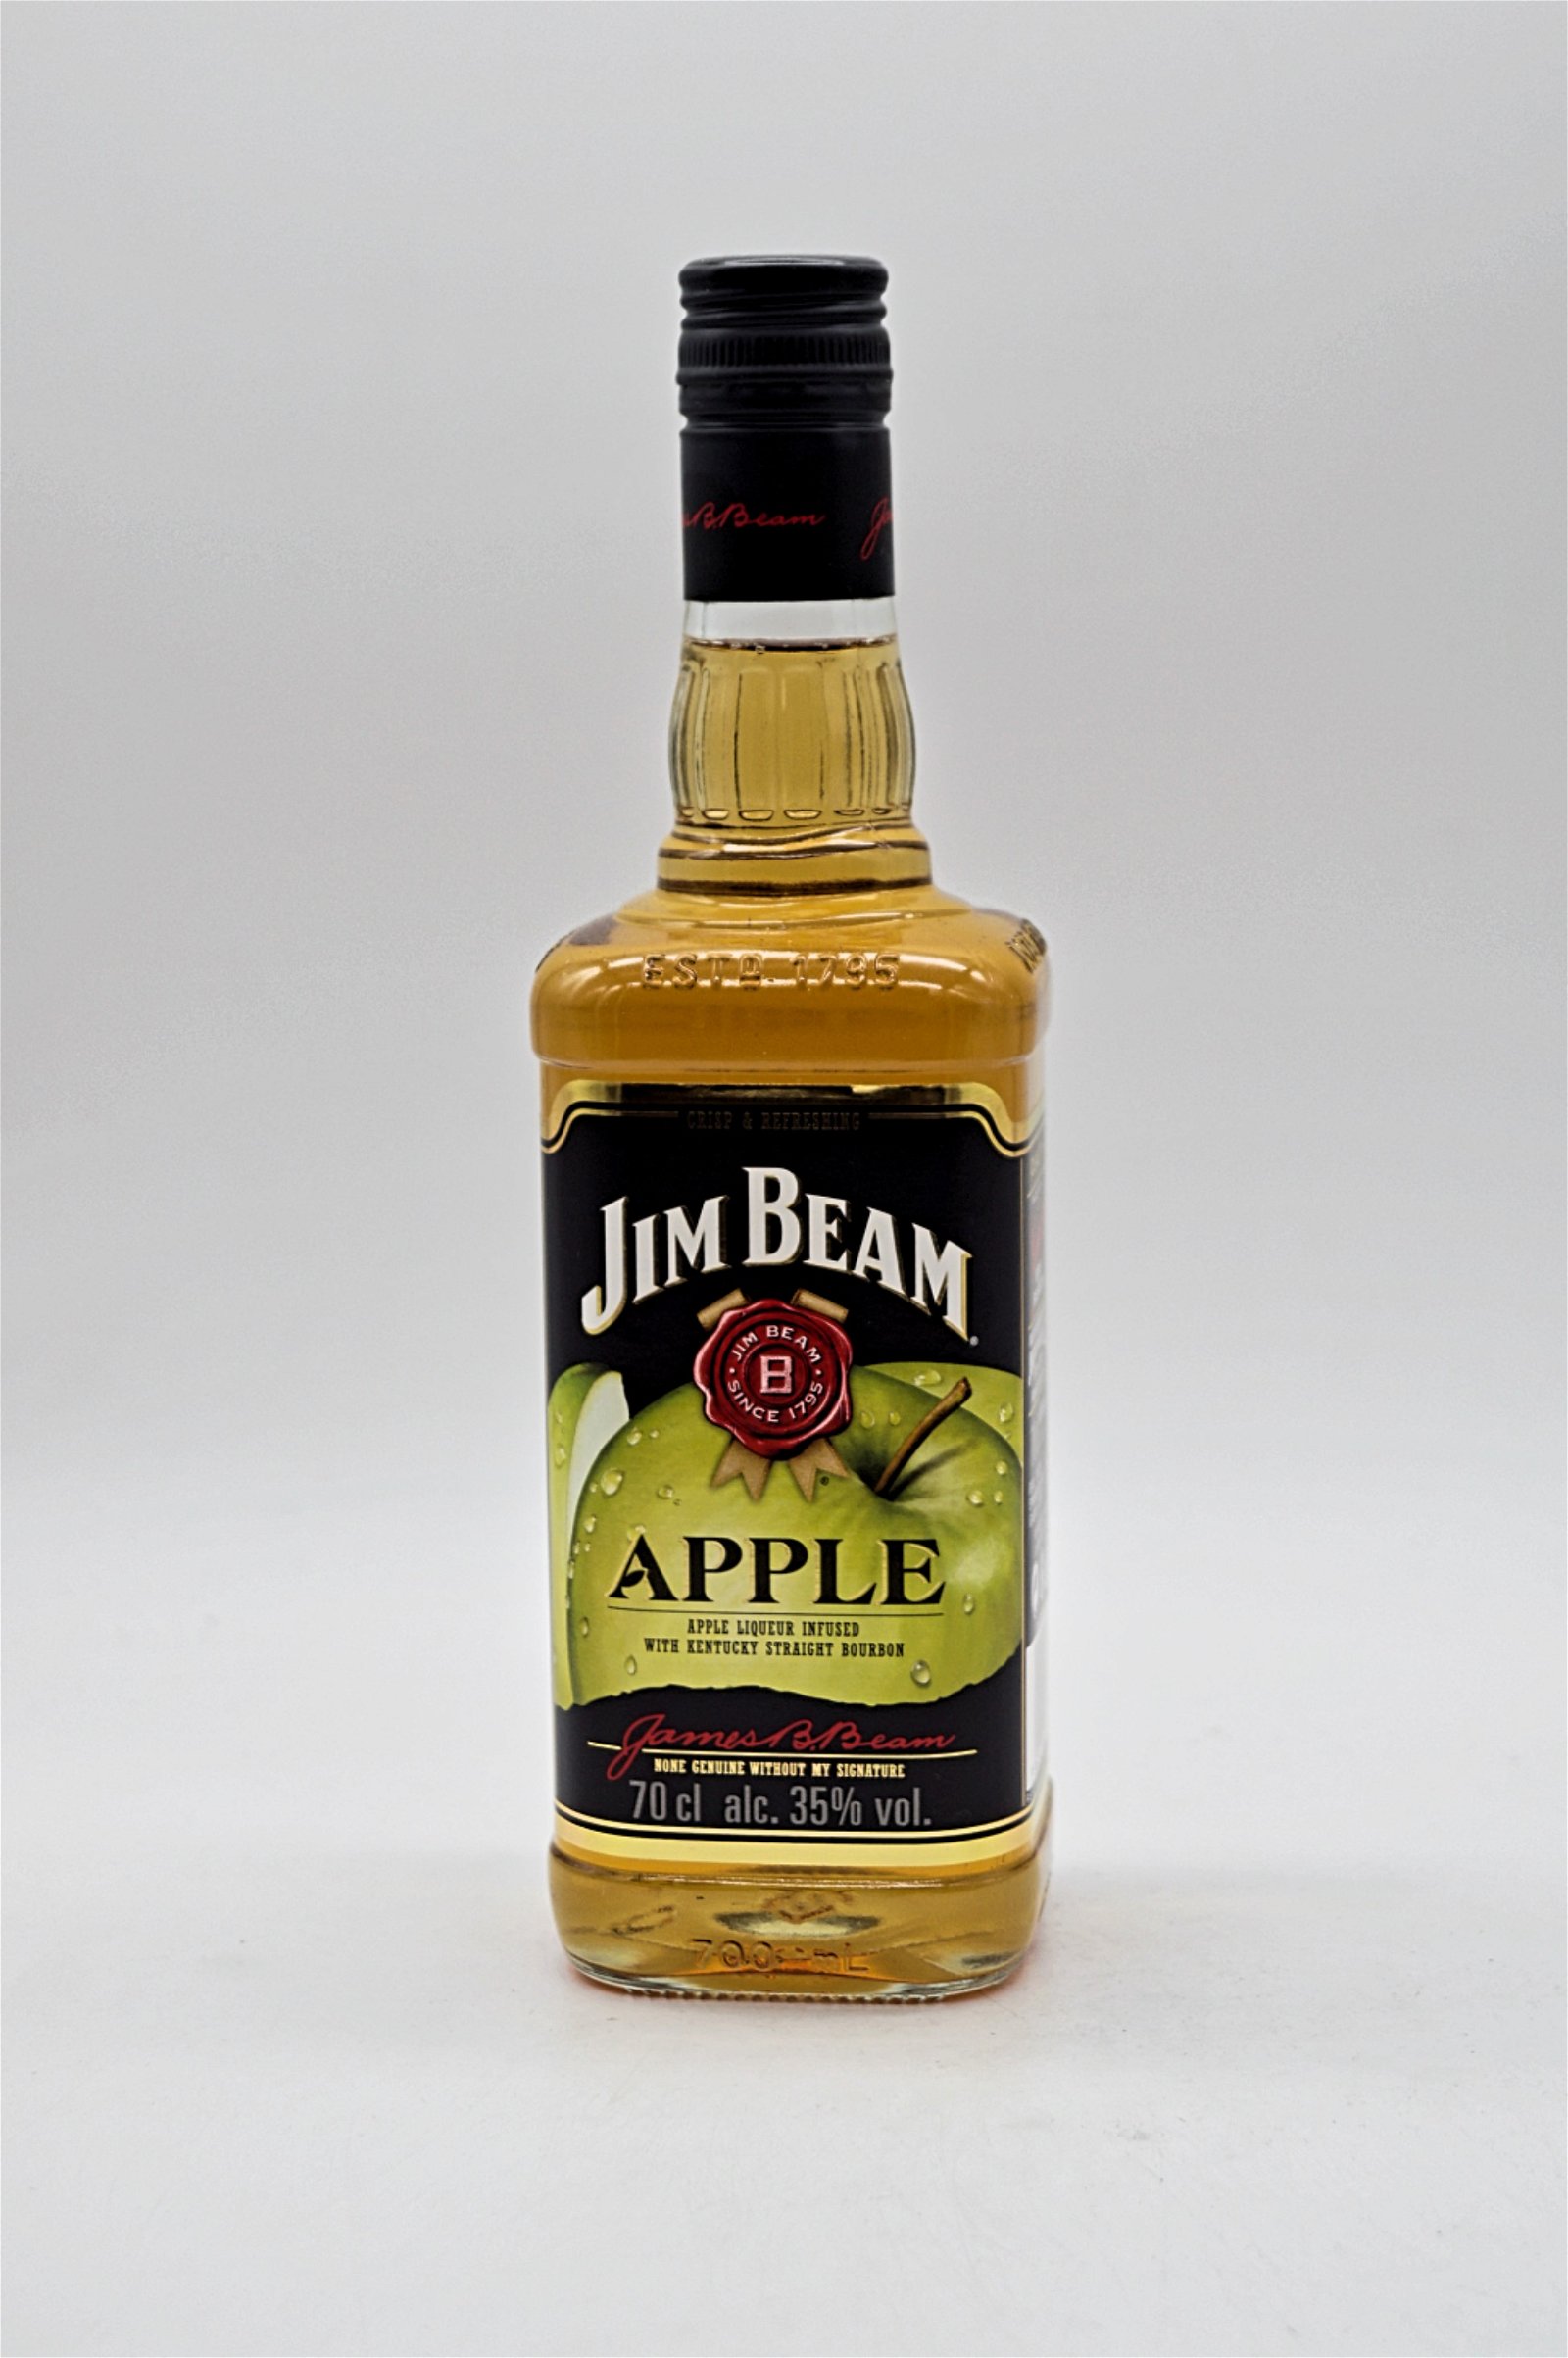 Jim Beam Apple Kentucky Straight Bourbon Whiskey